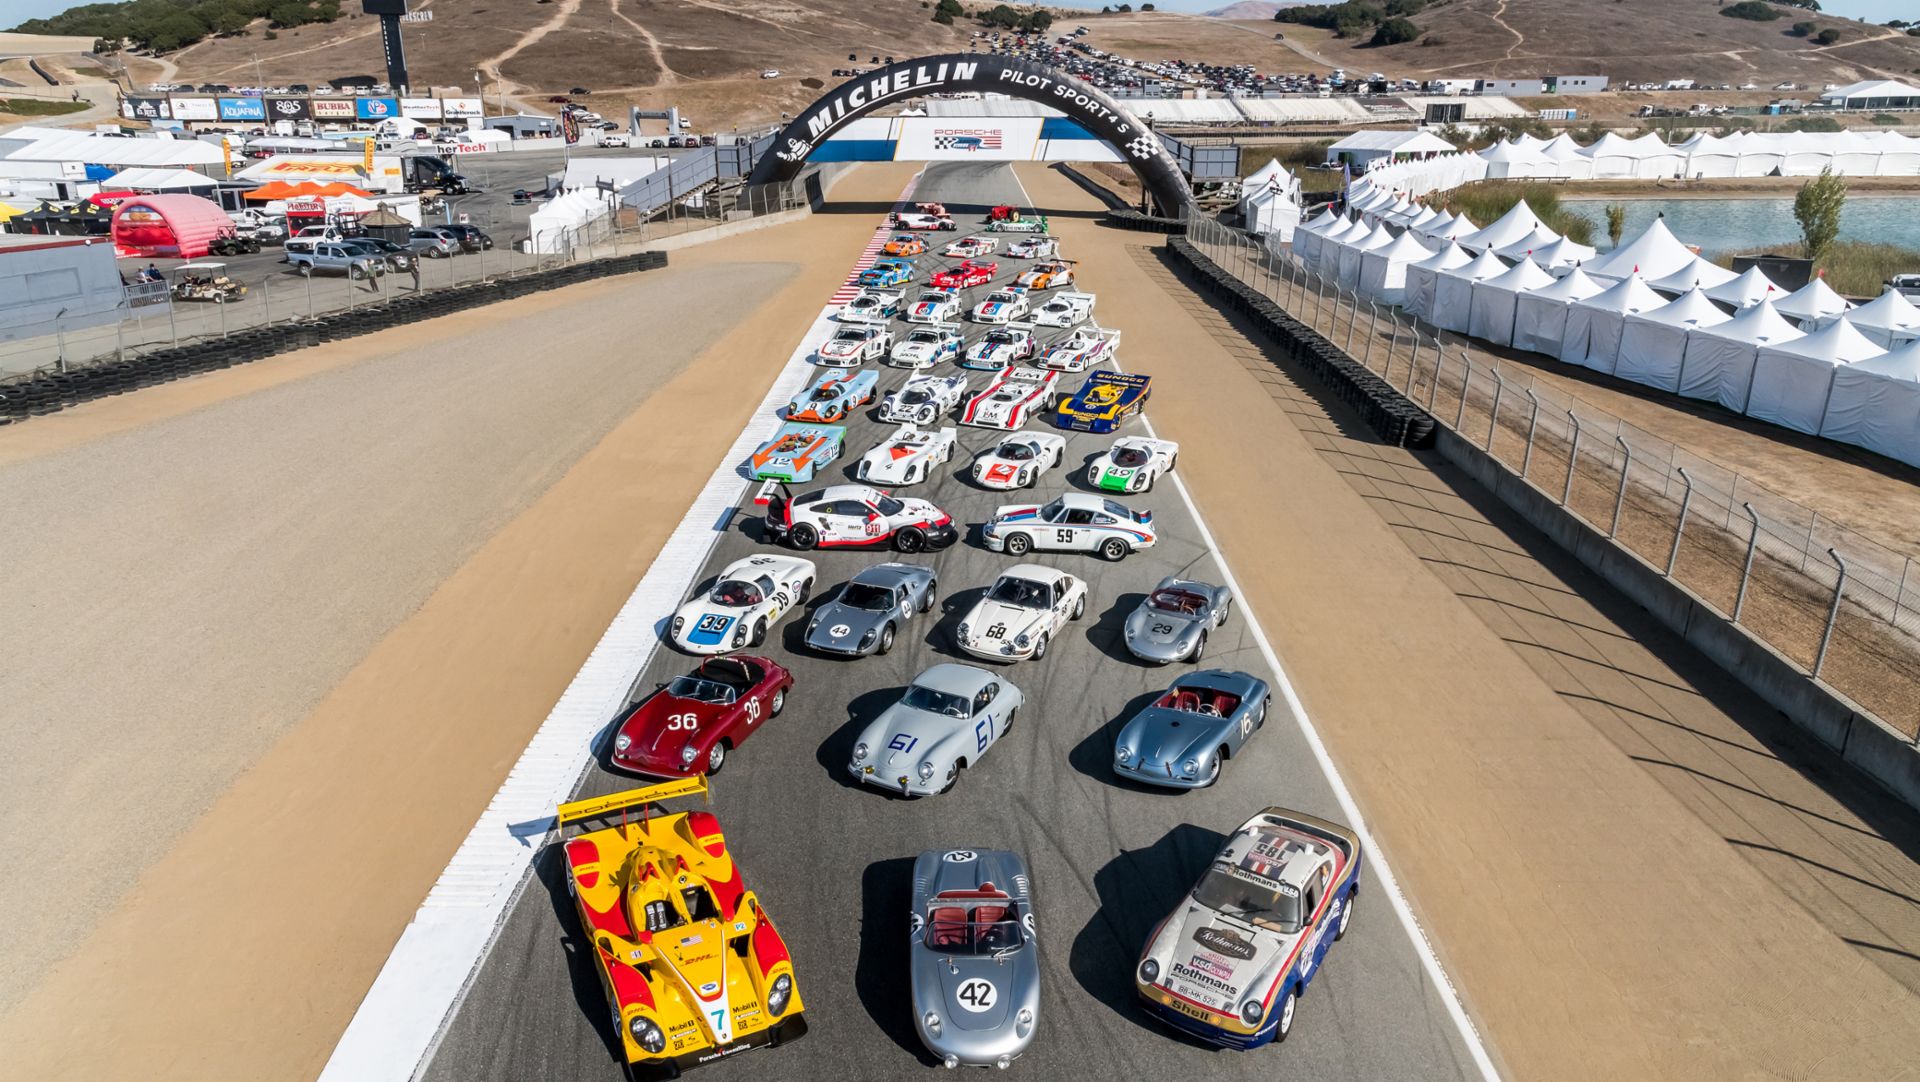 36 historic Porsche racecars parked along a racetrack